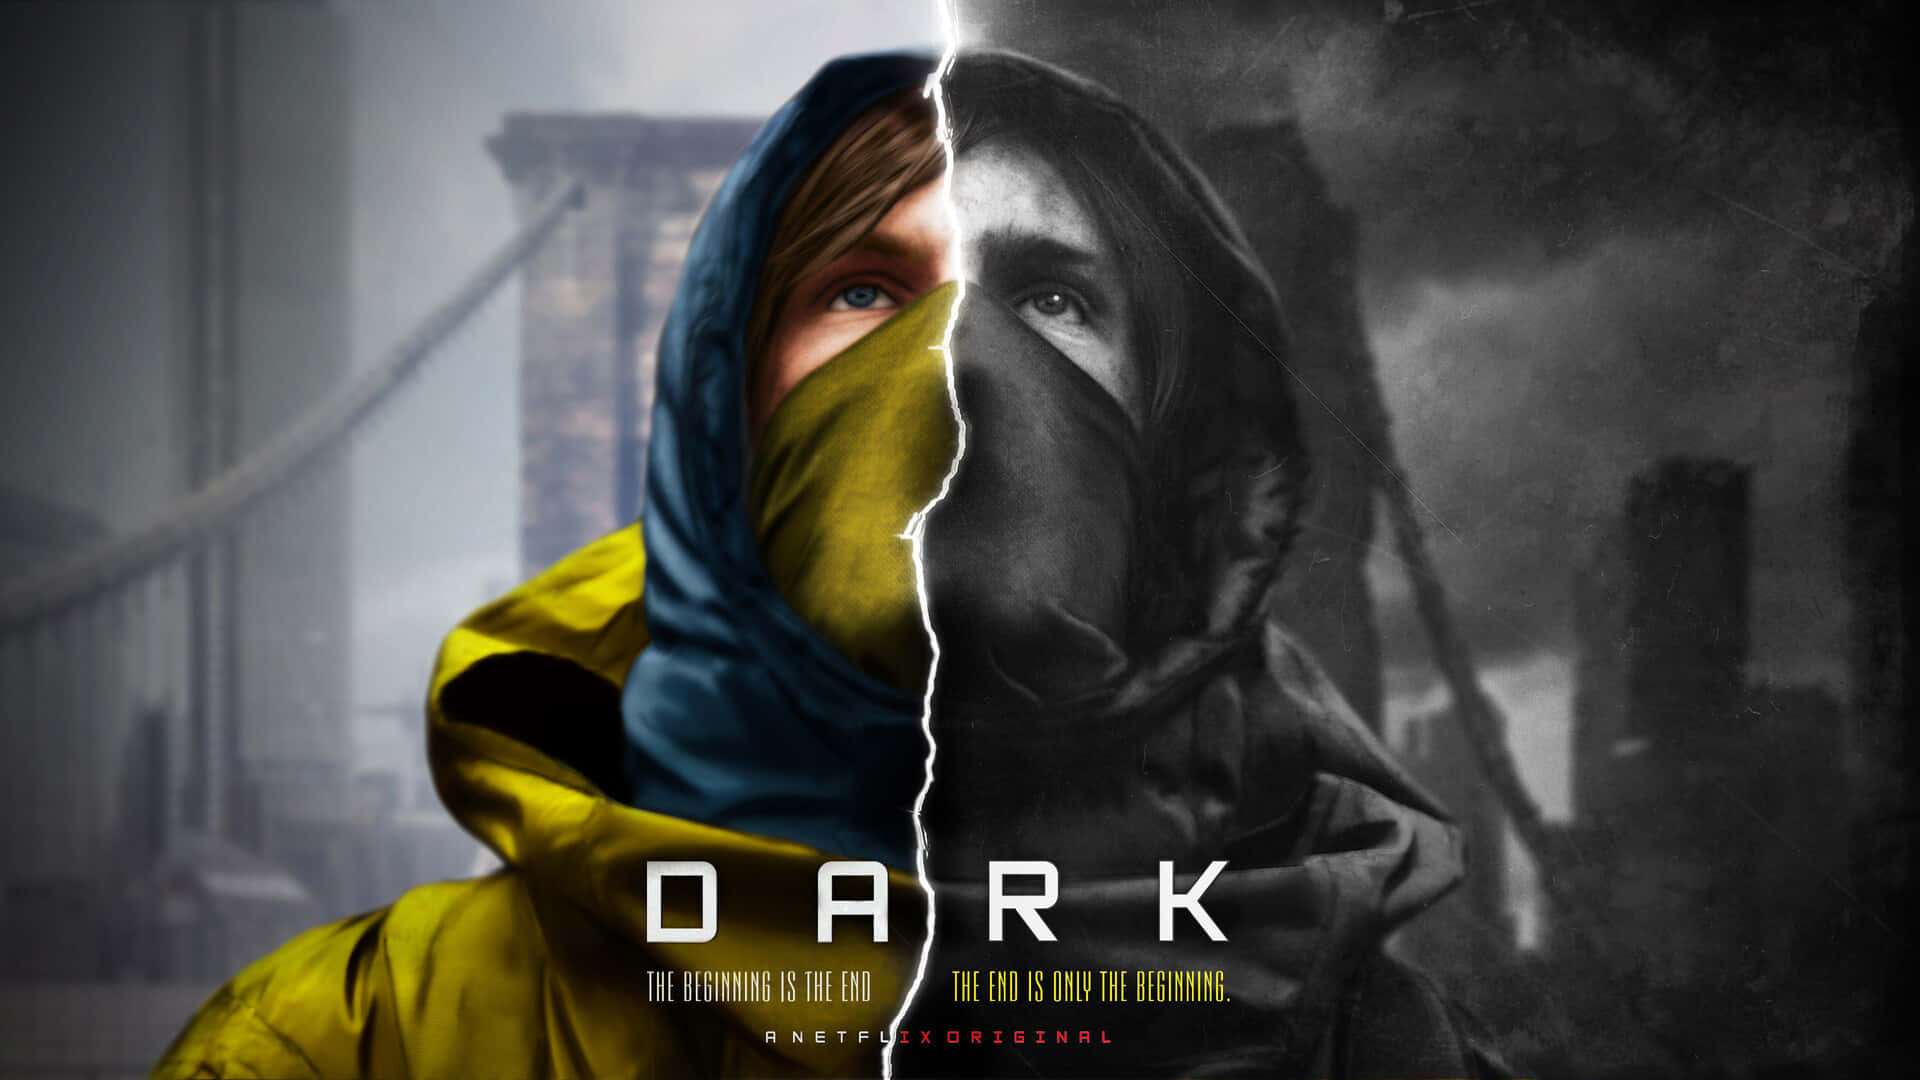 Split Poster Of The Dark Netflix Original Series Wallpaper